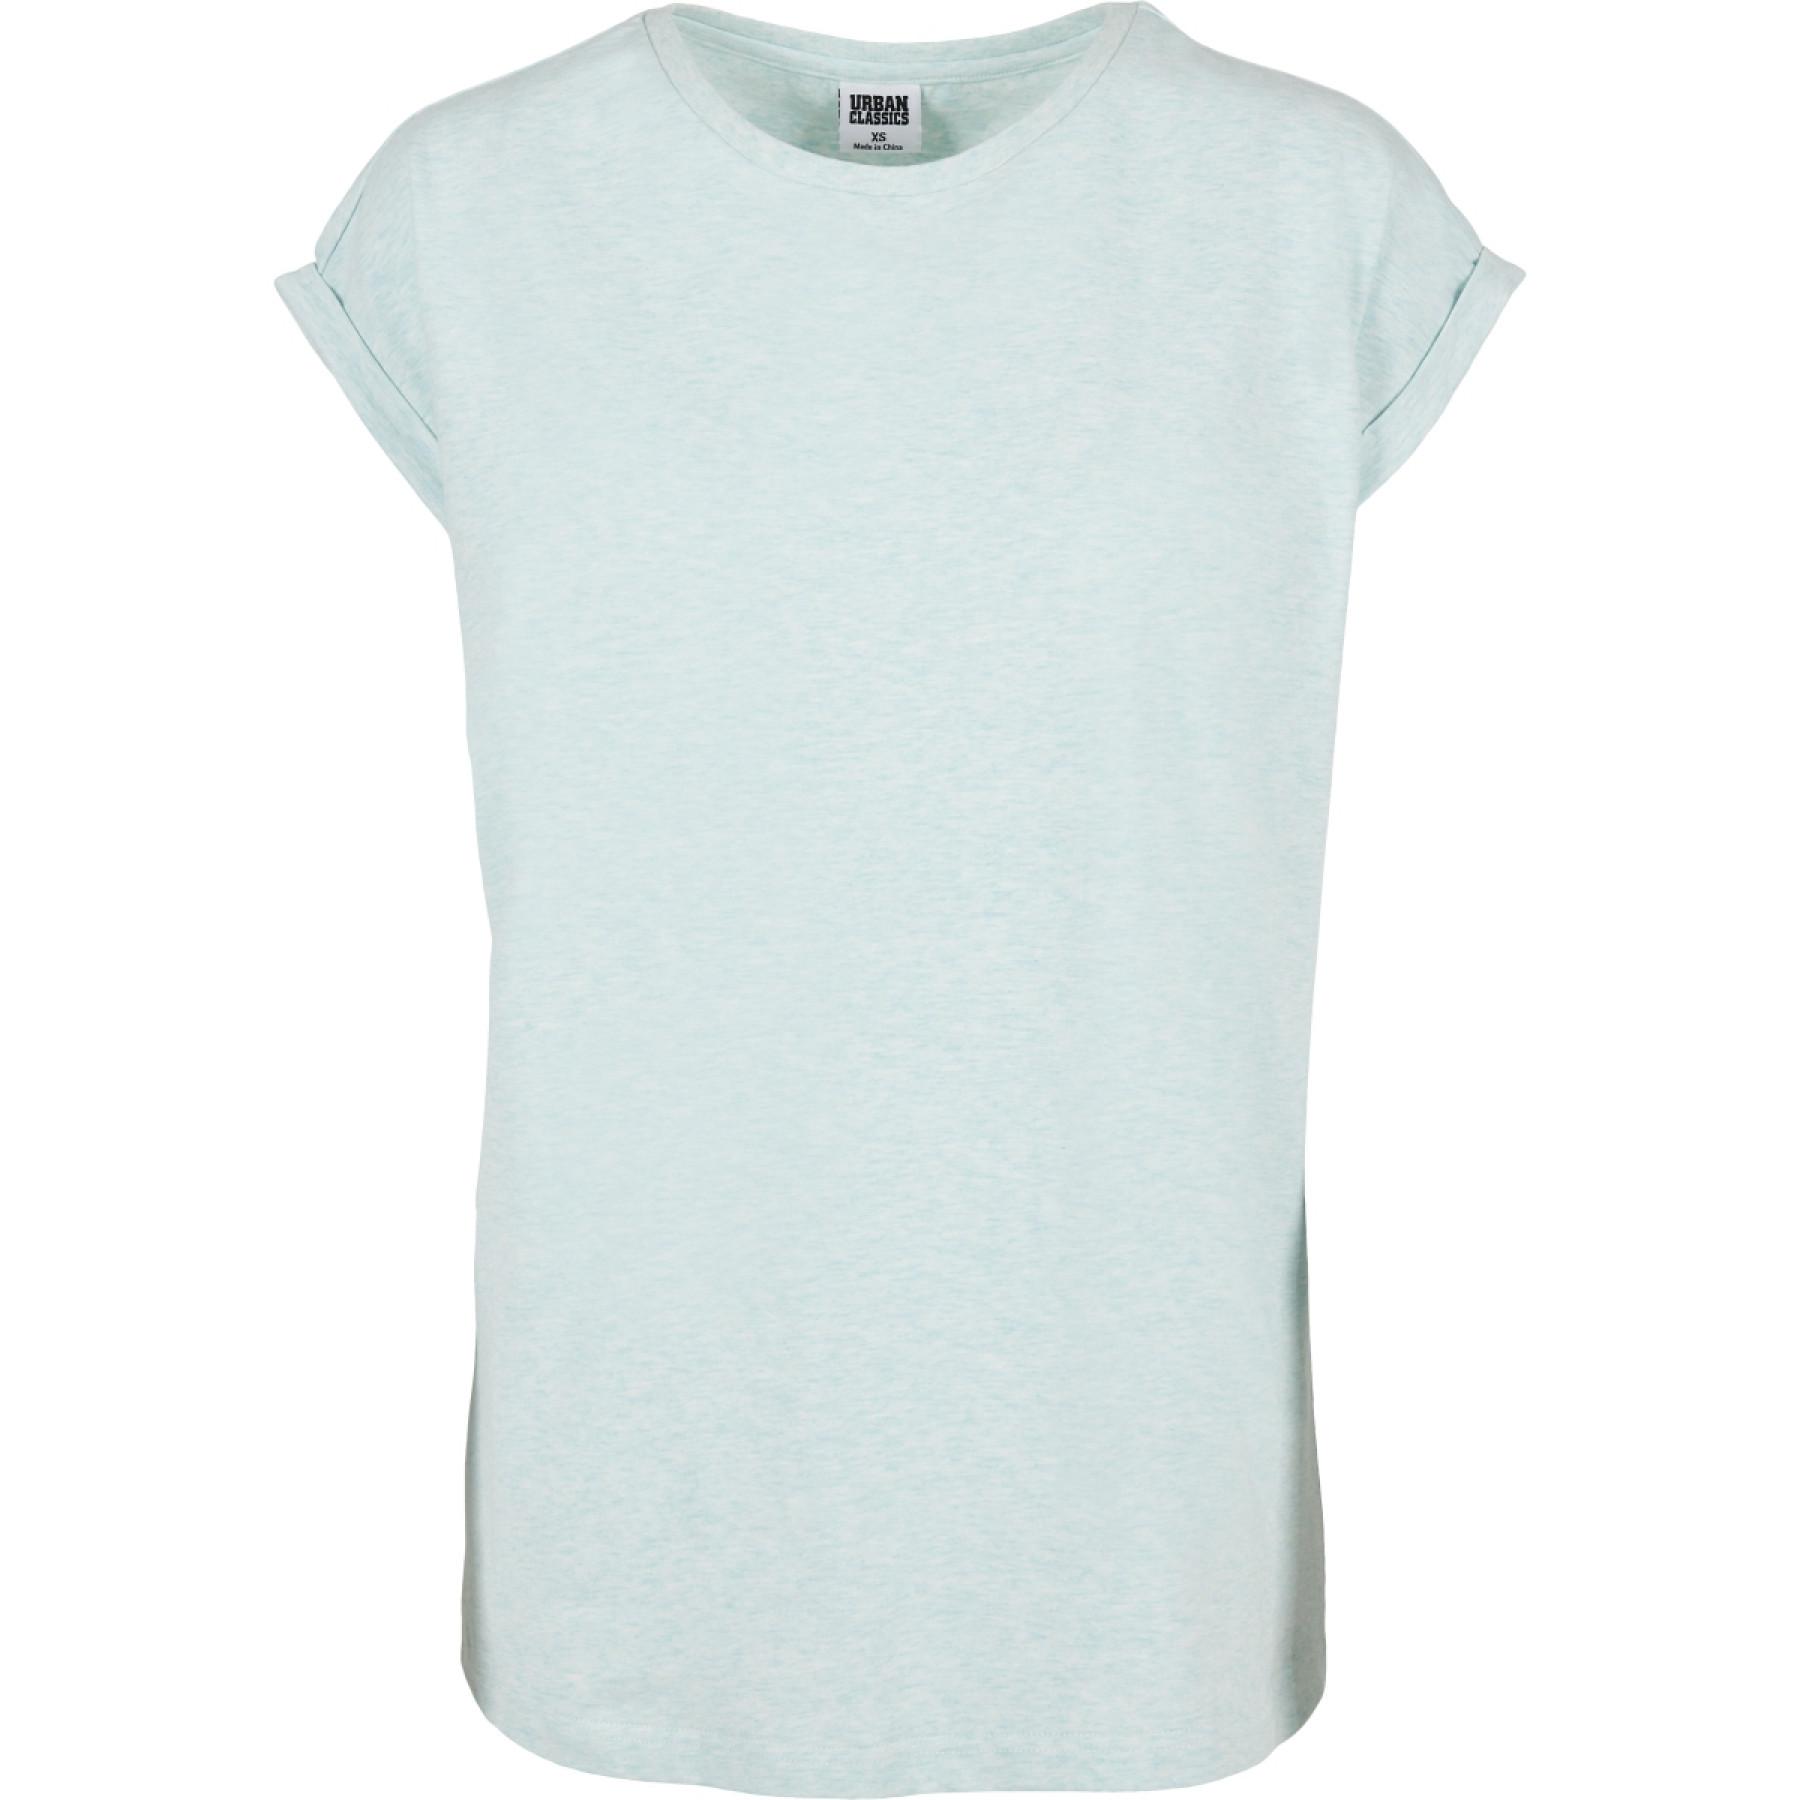 T-shirt för kvinnor Urban Classics color melange extended shoulder-grandes tailles